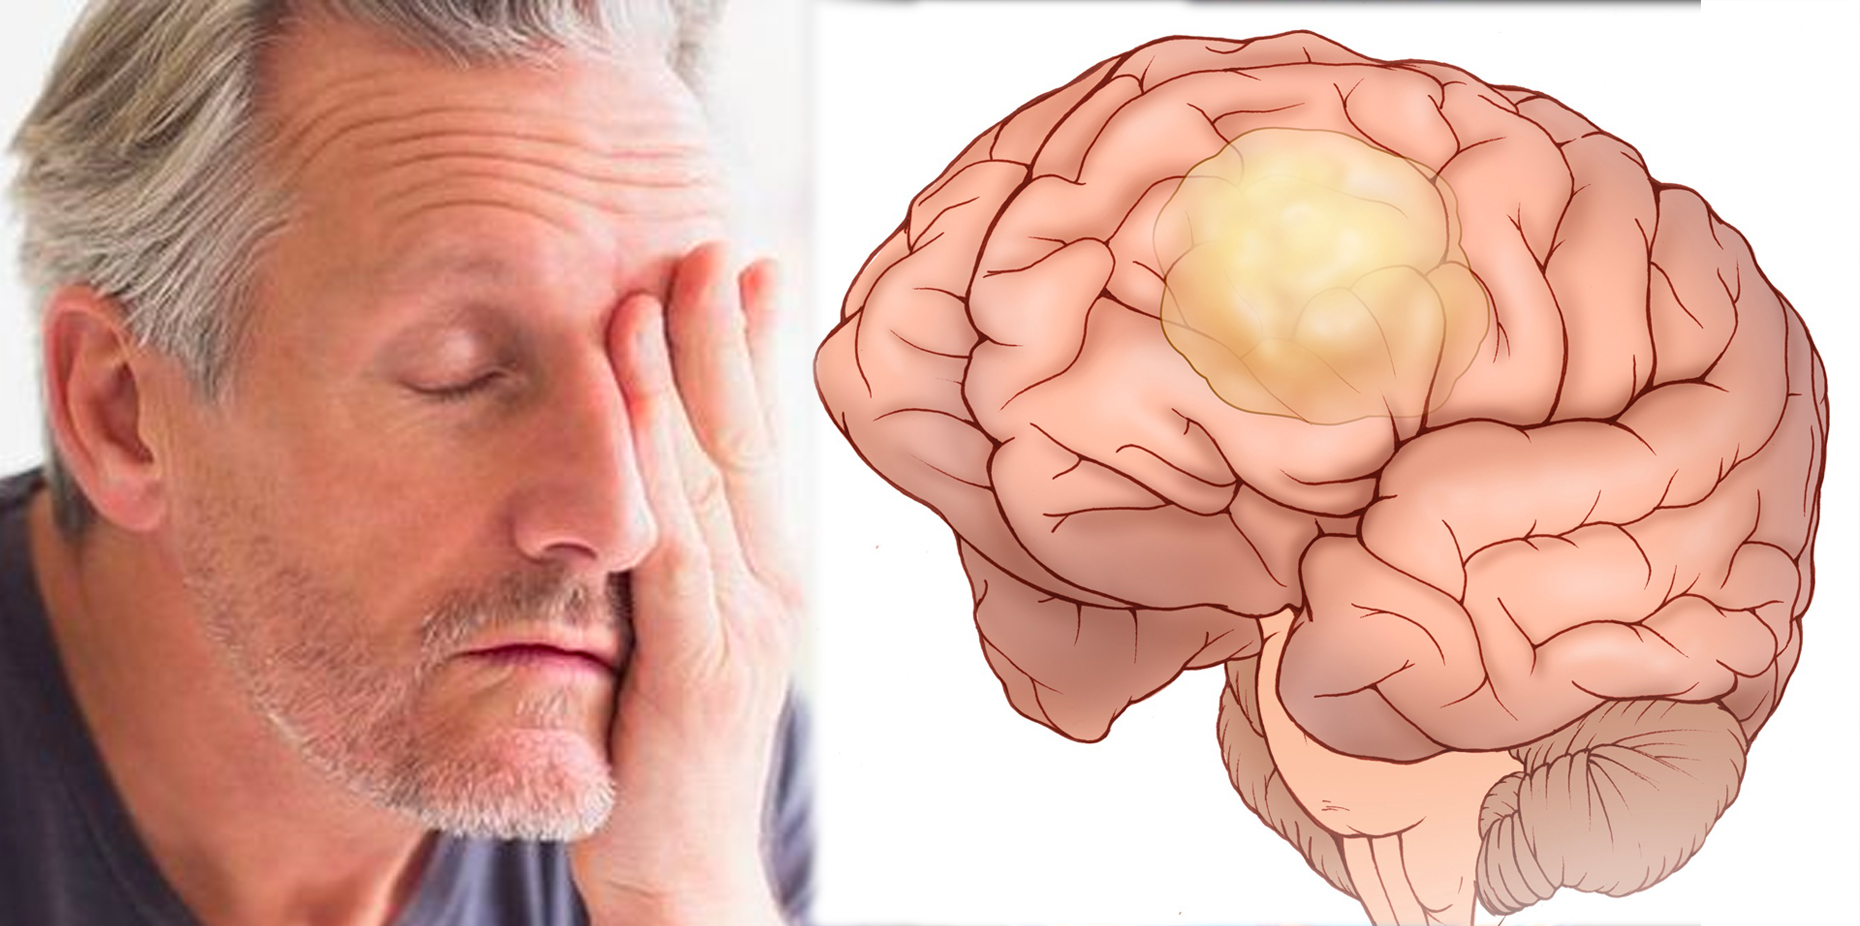 9 Warning Signs & Symptoms Of Brain Tumor